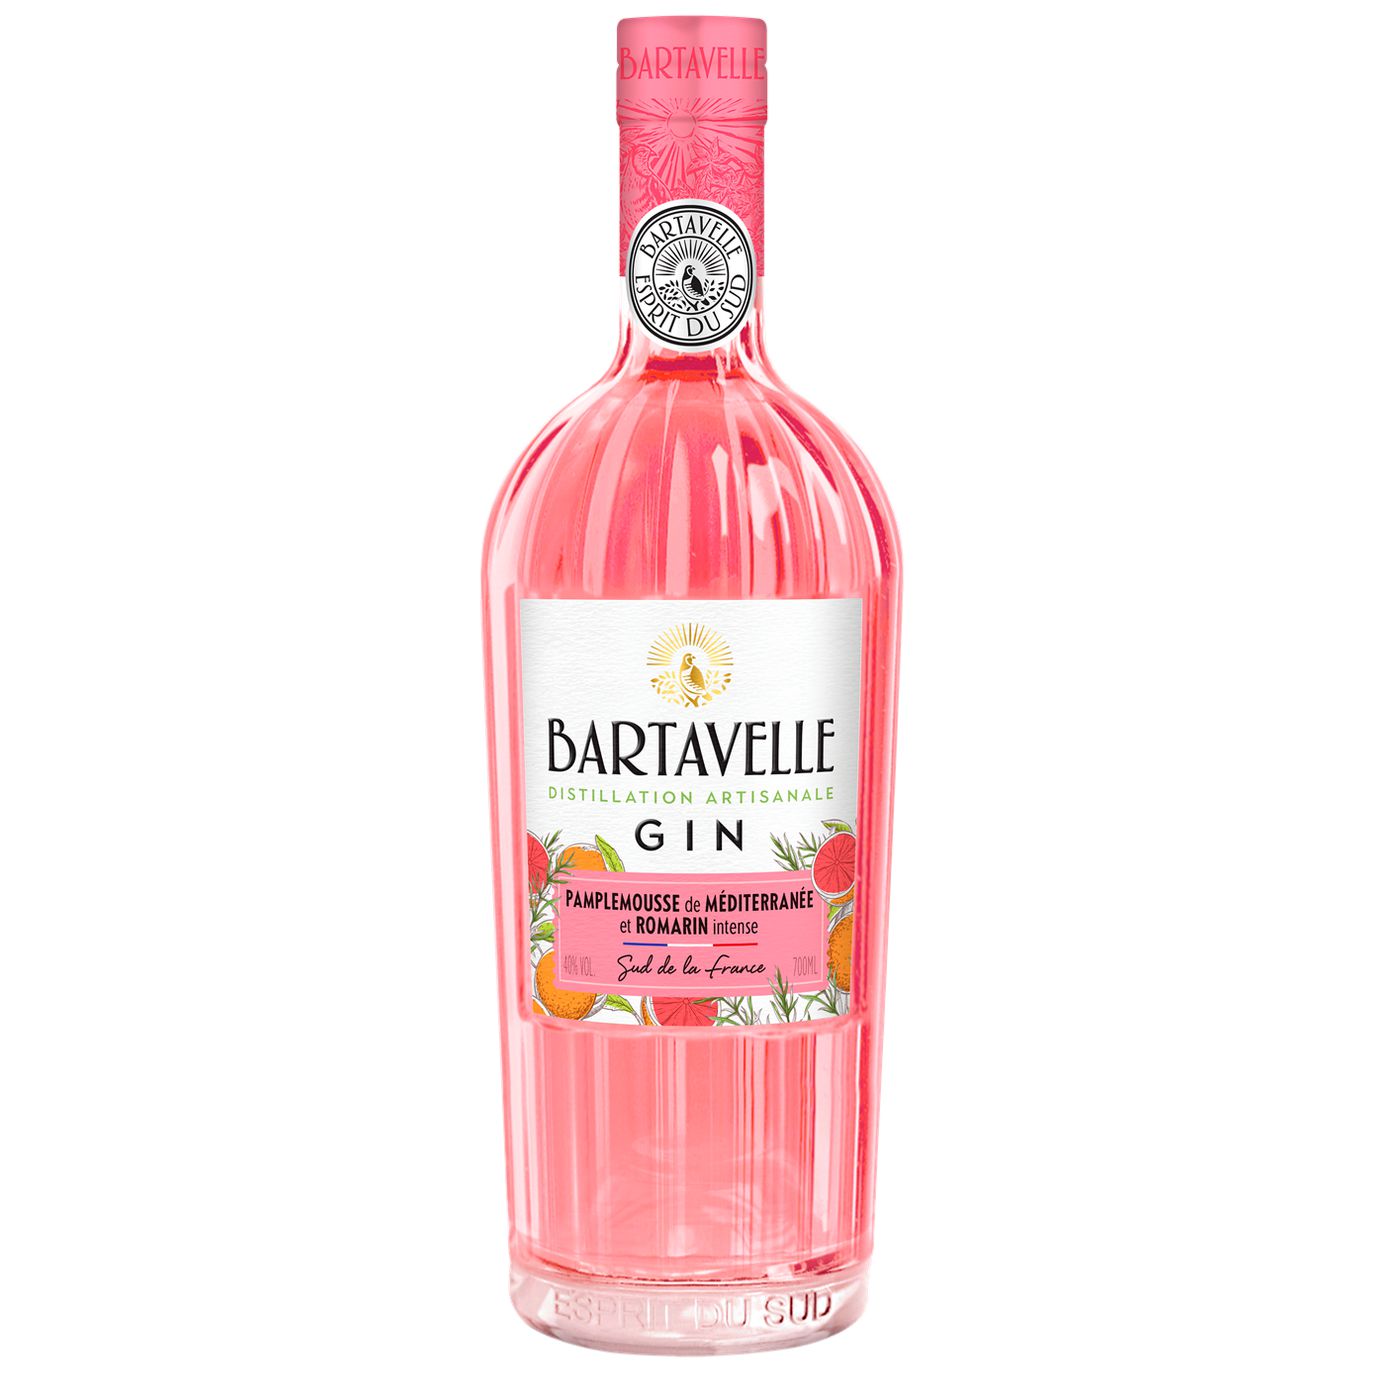 Gin Bartavelle - Pamplemousse & Romarin